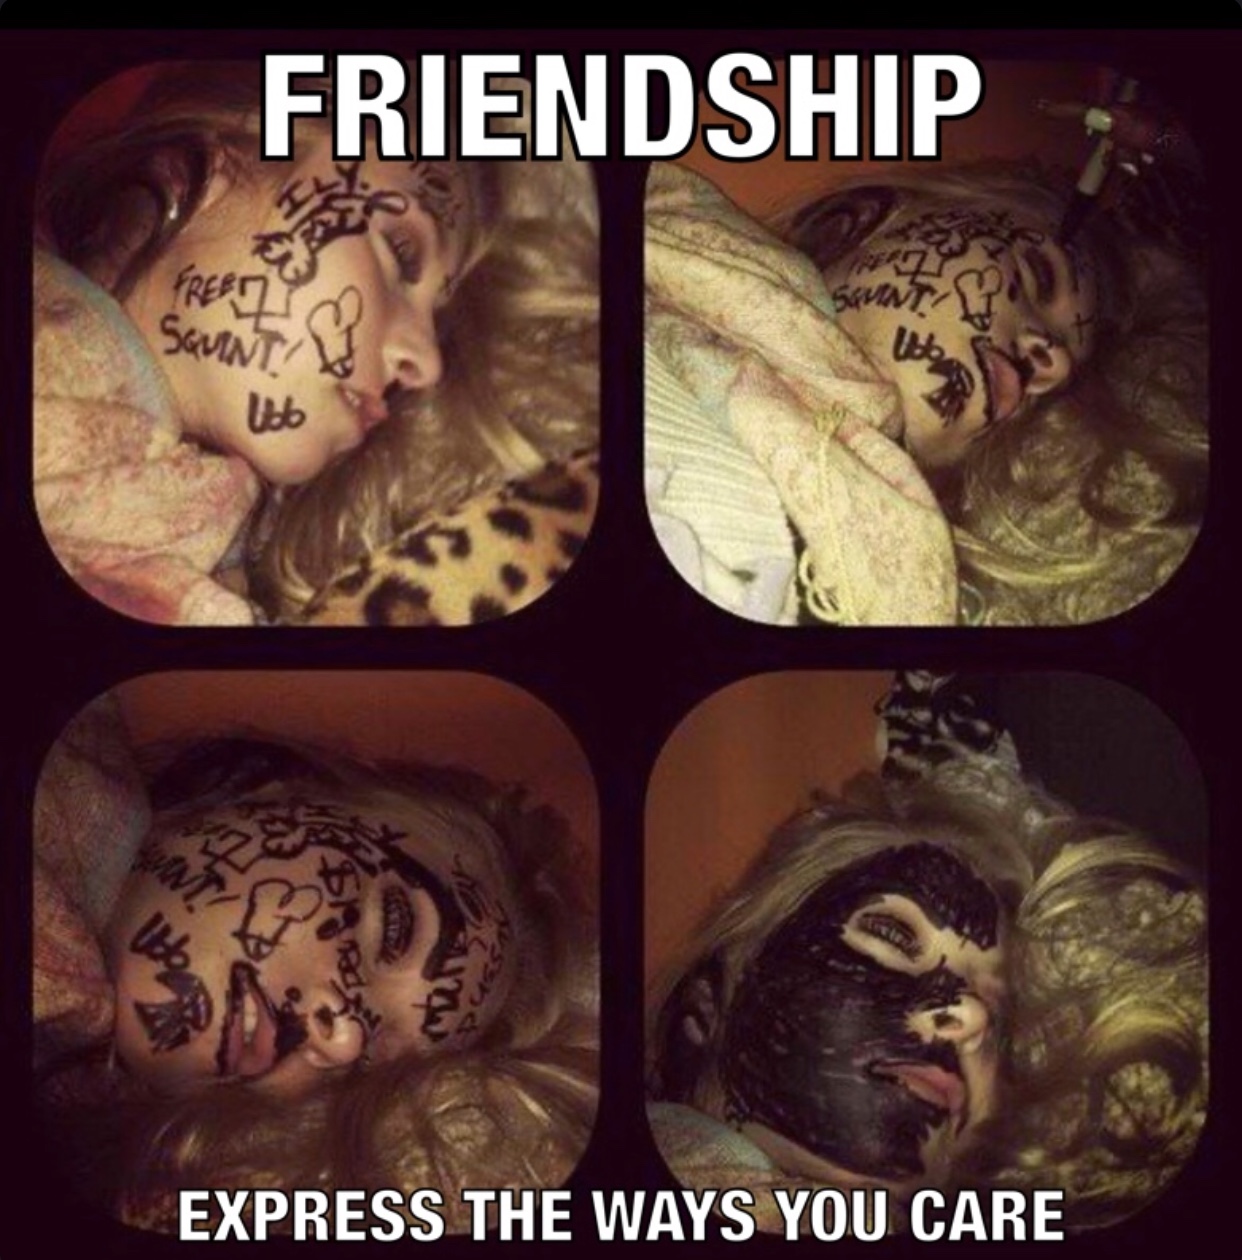 head - Friendship 5&Vini Sant Udb Express The Ways You Care